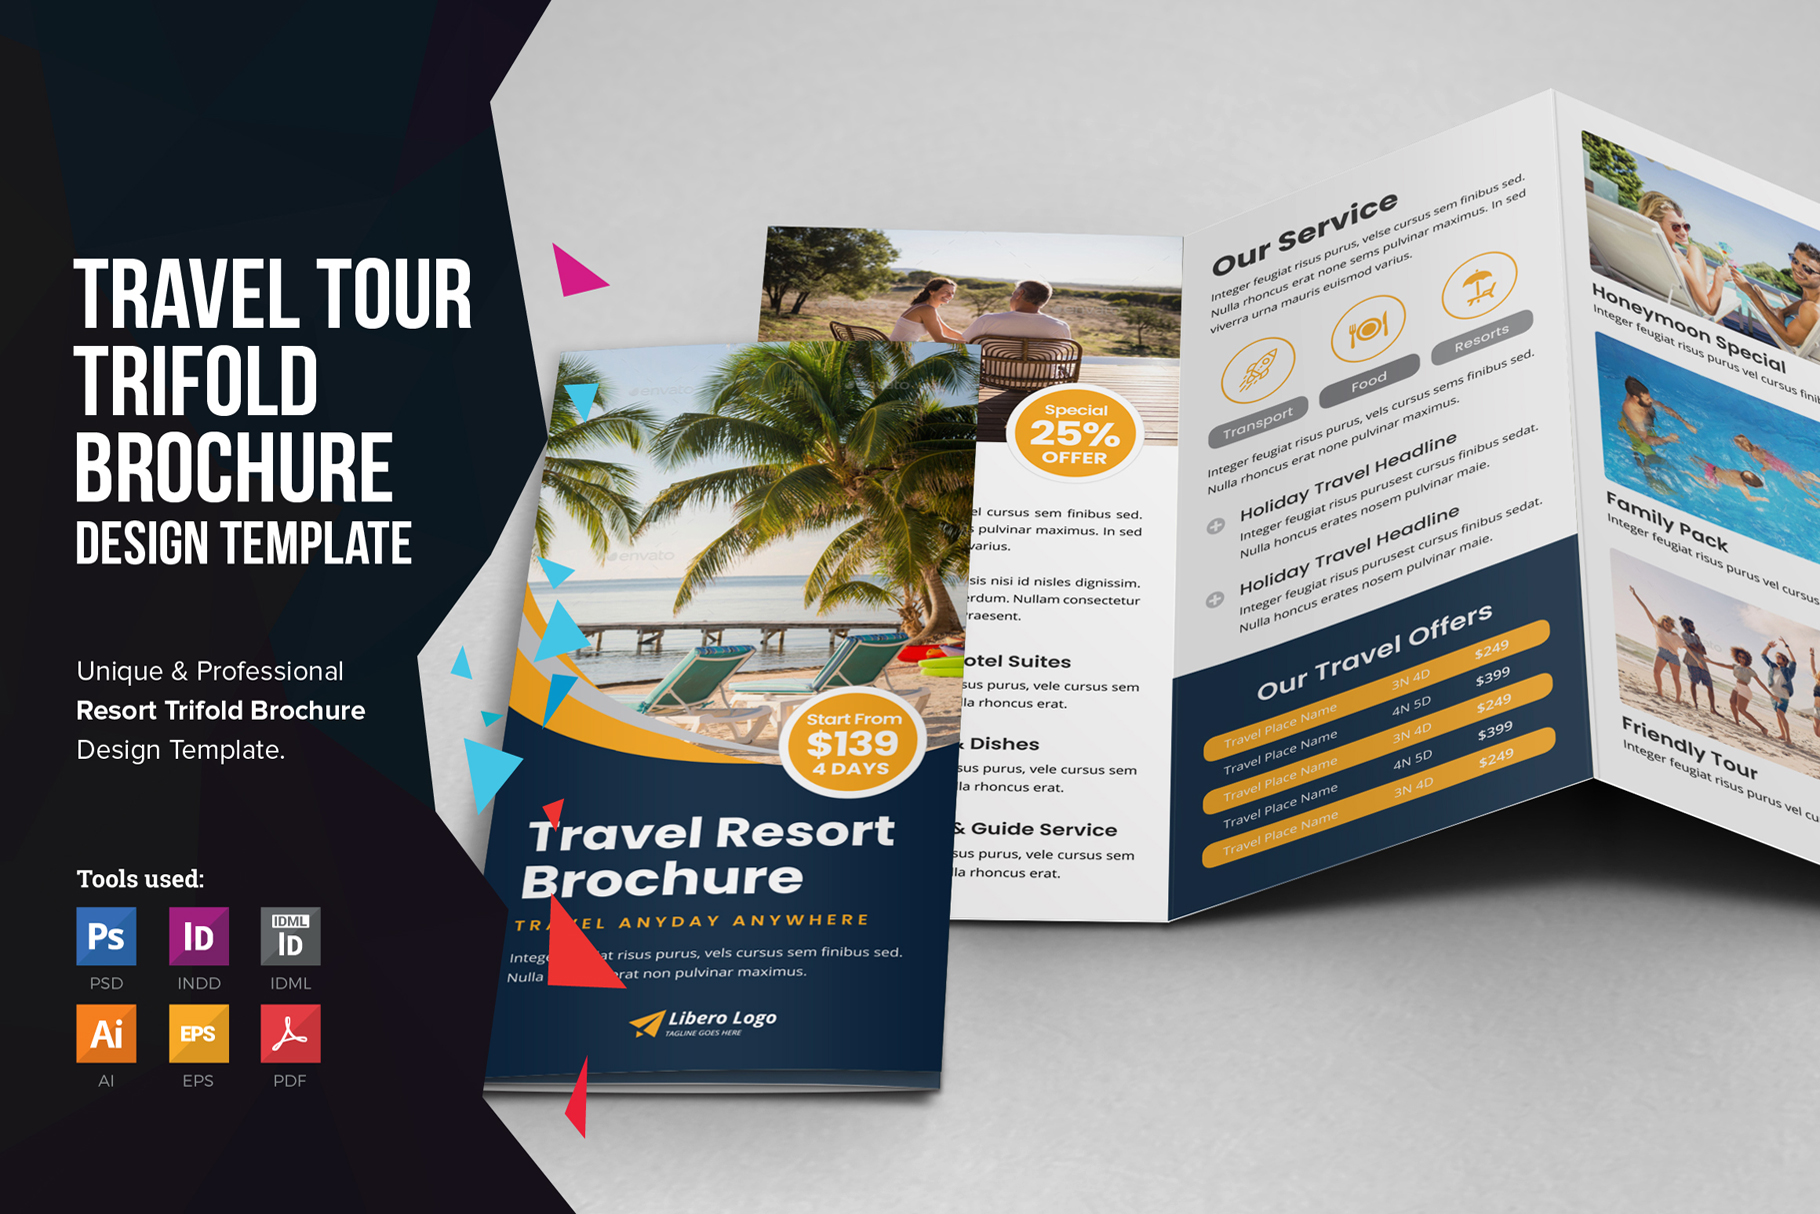 Travel Brochure Templates